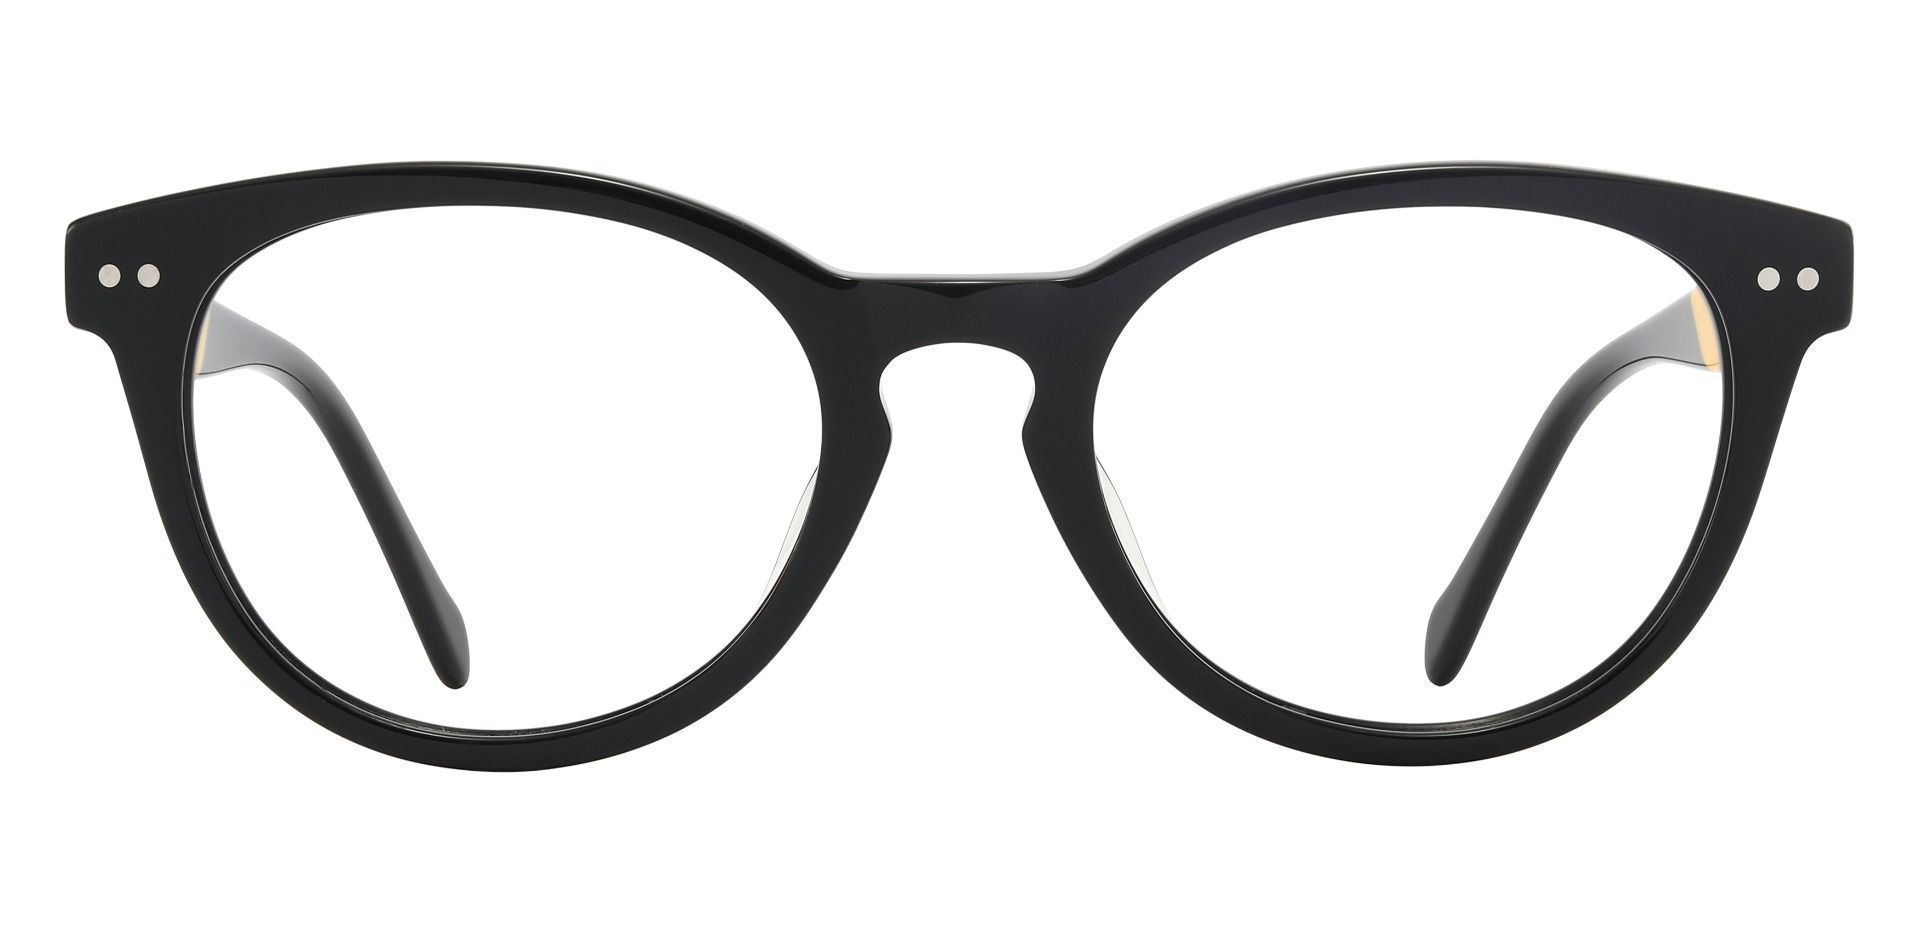 Carson Oval Blue Light Blocking Glasses - Black